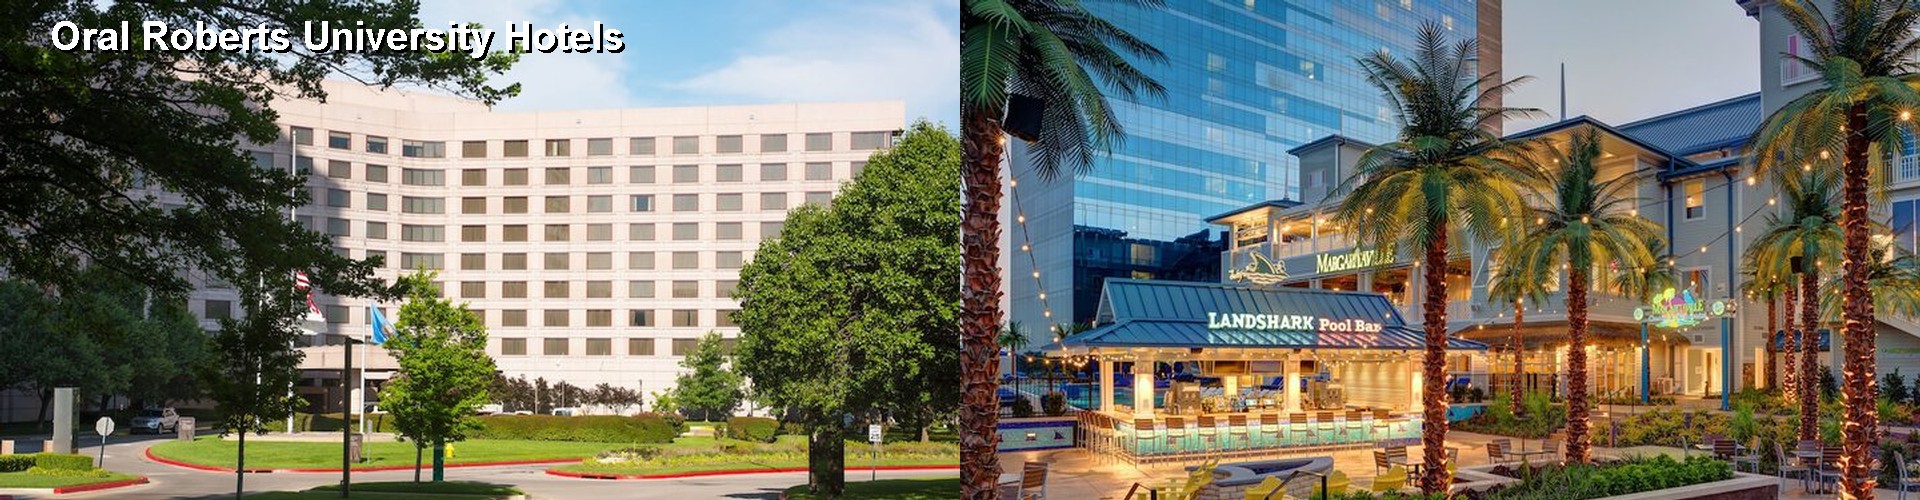 5 Best Hotels near Oral Roberts University